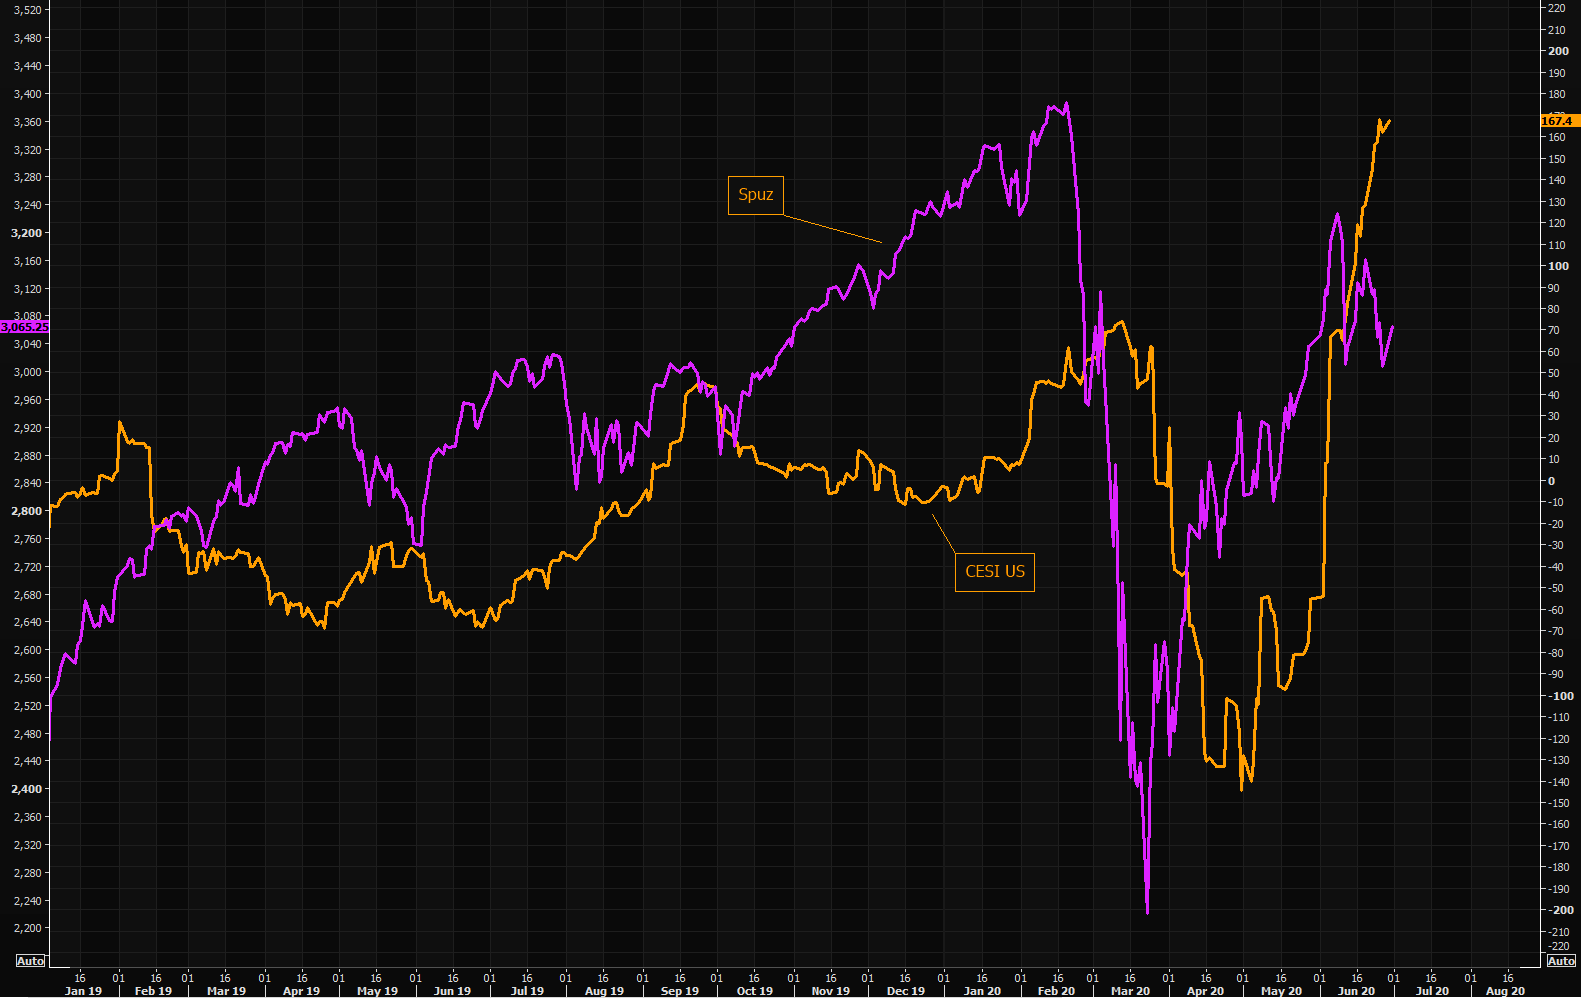 S&P just catching up to Citi's economic surprise index